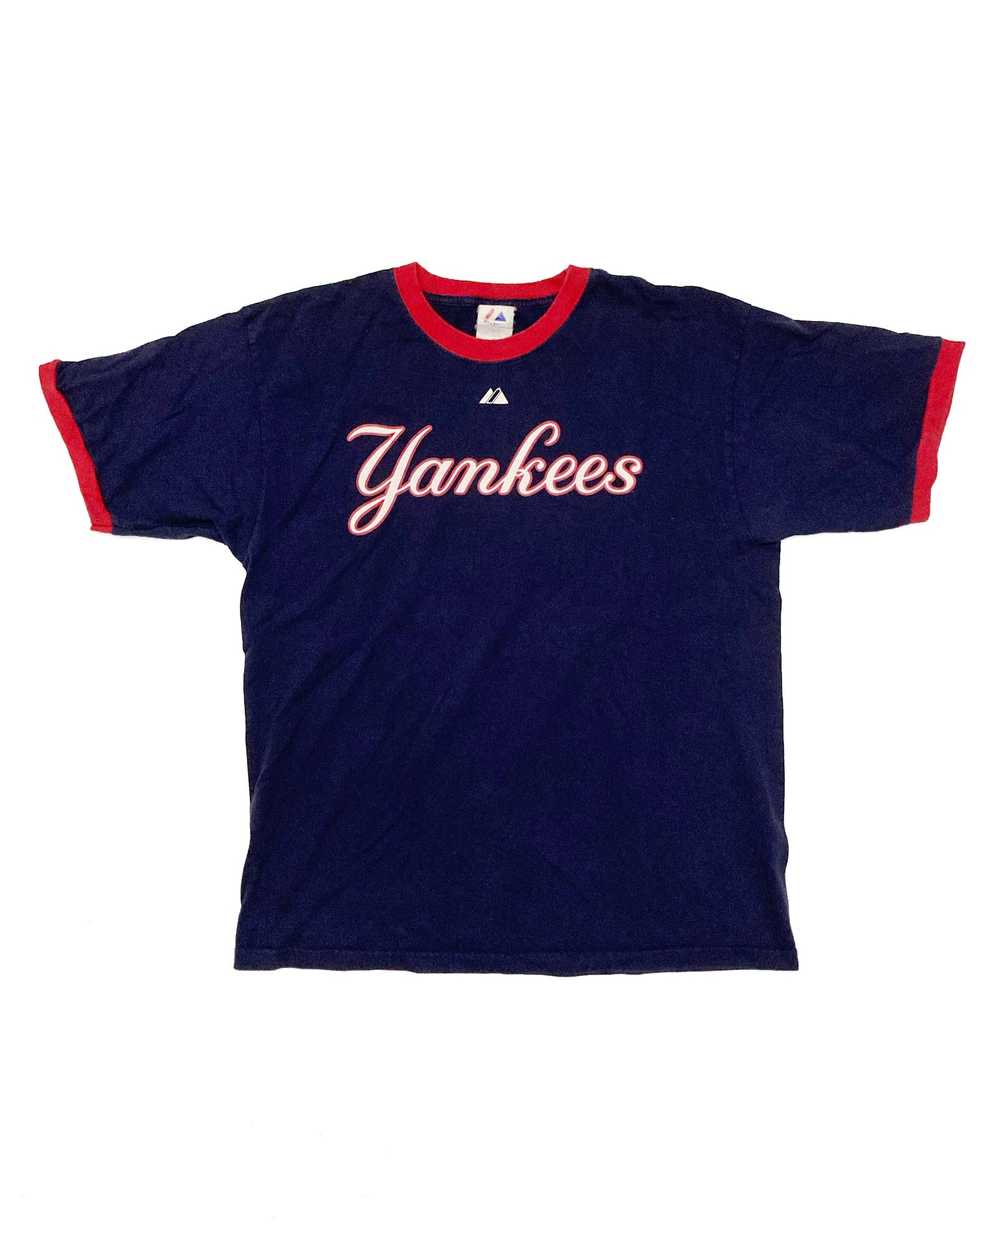 Majestic New York Yankees Vintage Ringer Shirt - image 1